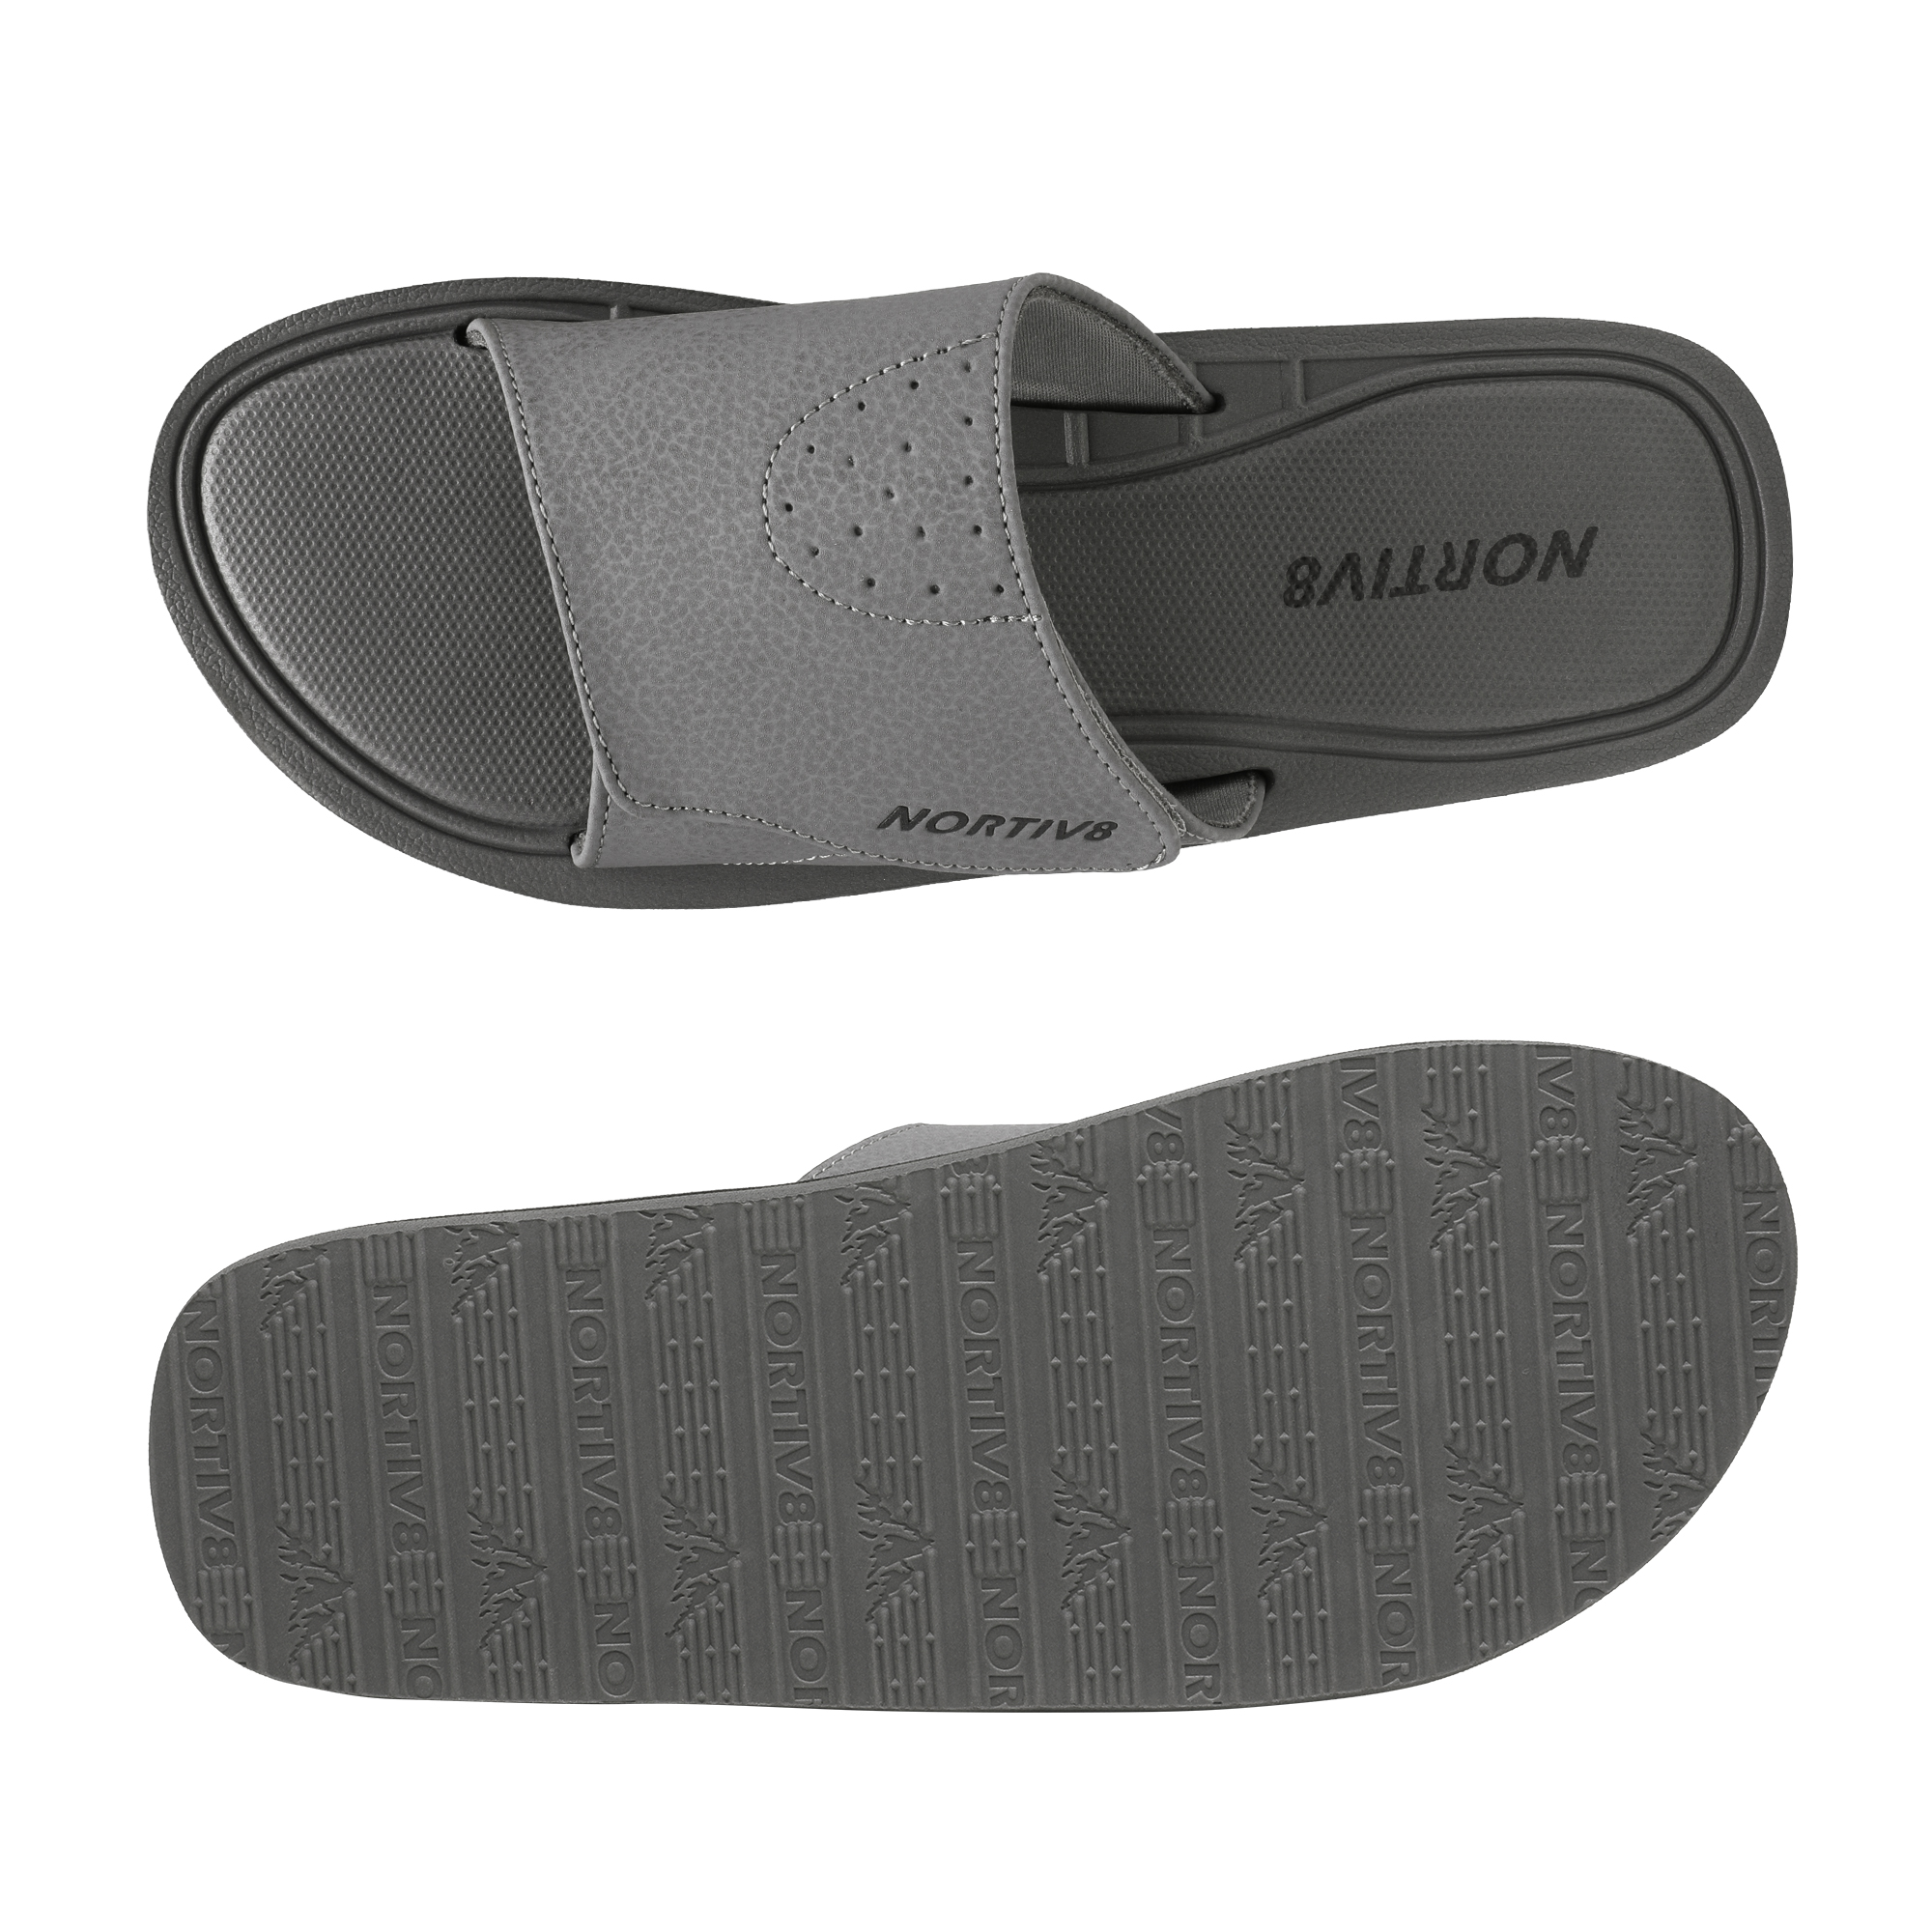 Nortiv8 Men's Memory Foam Adjustable Slide Sandals Comfort Lightweight Summer Beach Sandals Shoes FUSION GREY Size 12 - image 3 of 5